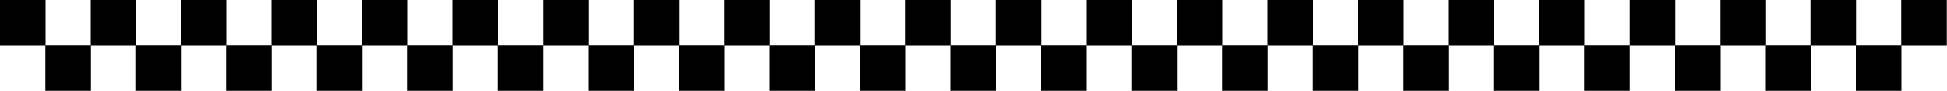 Checkered Banner